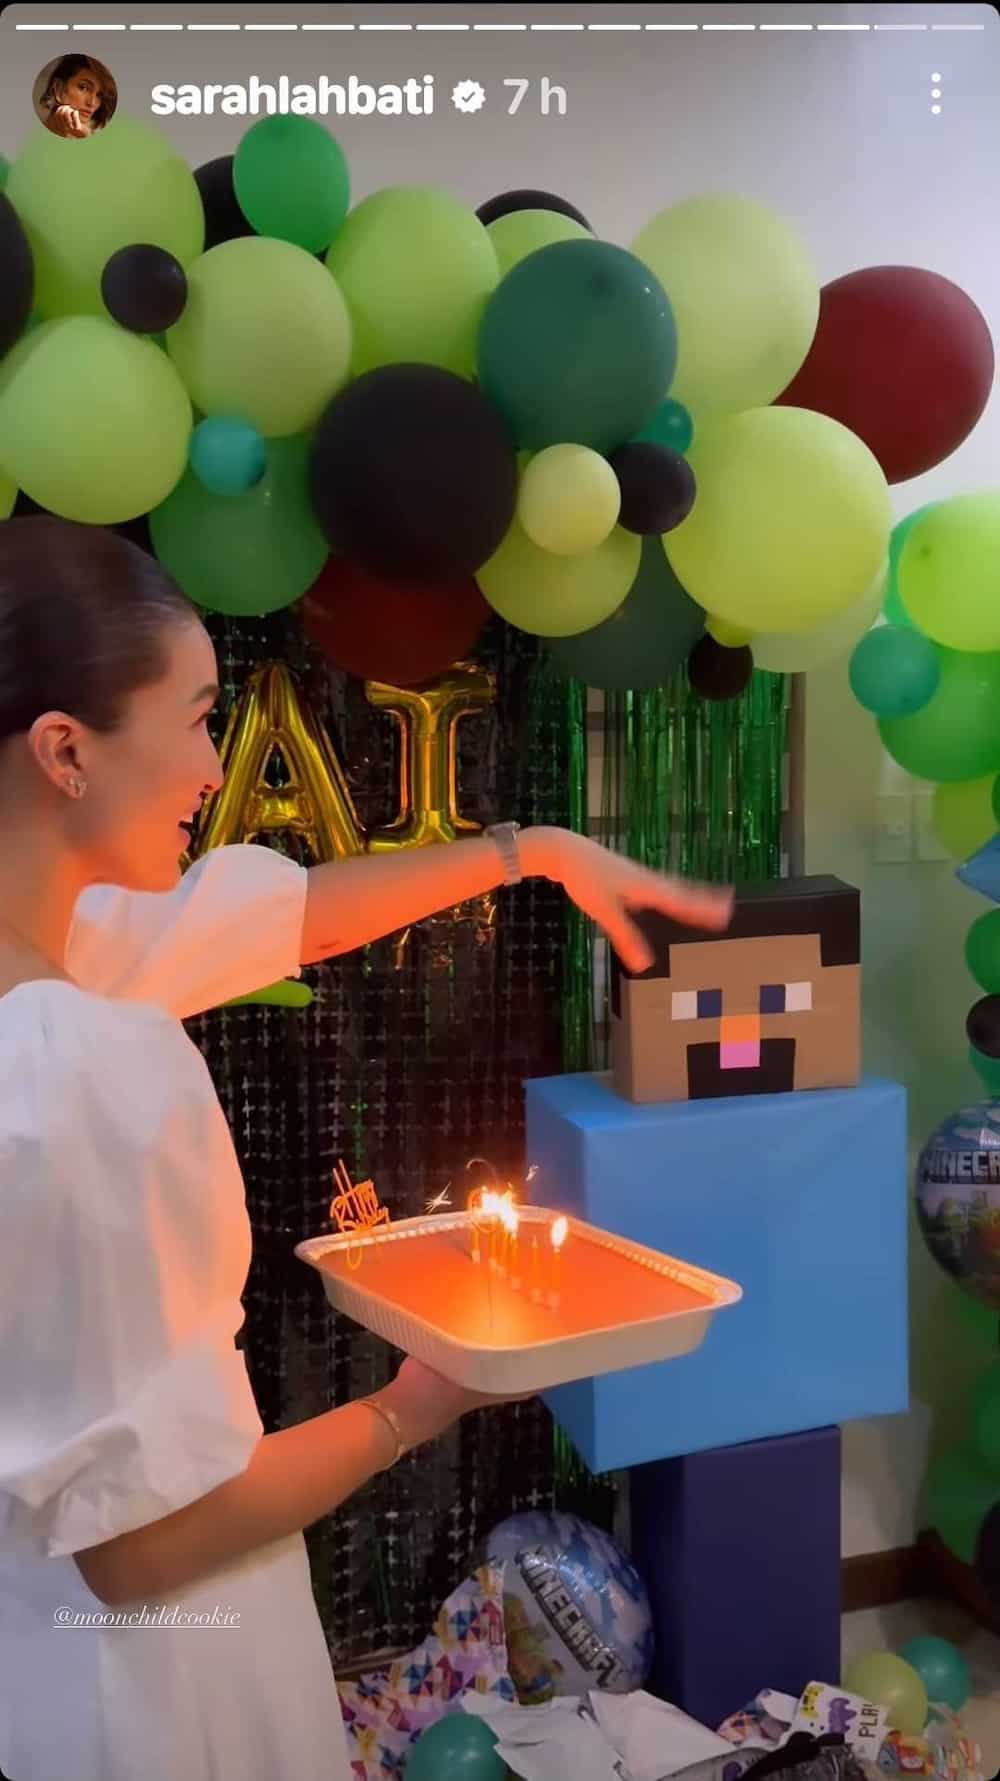 Sarah Lahbati shares video of Kai Gutierrez celebrating birthday with her